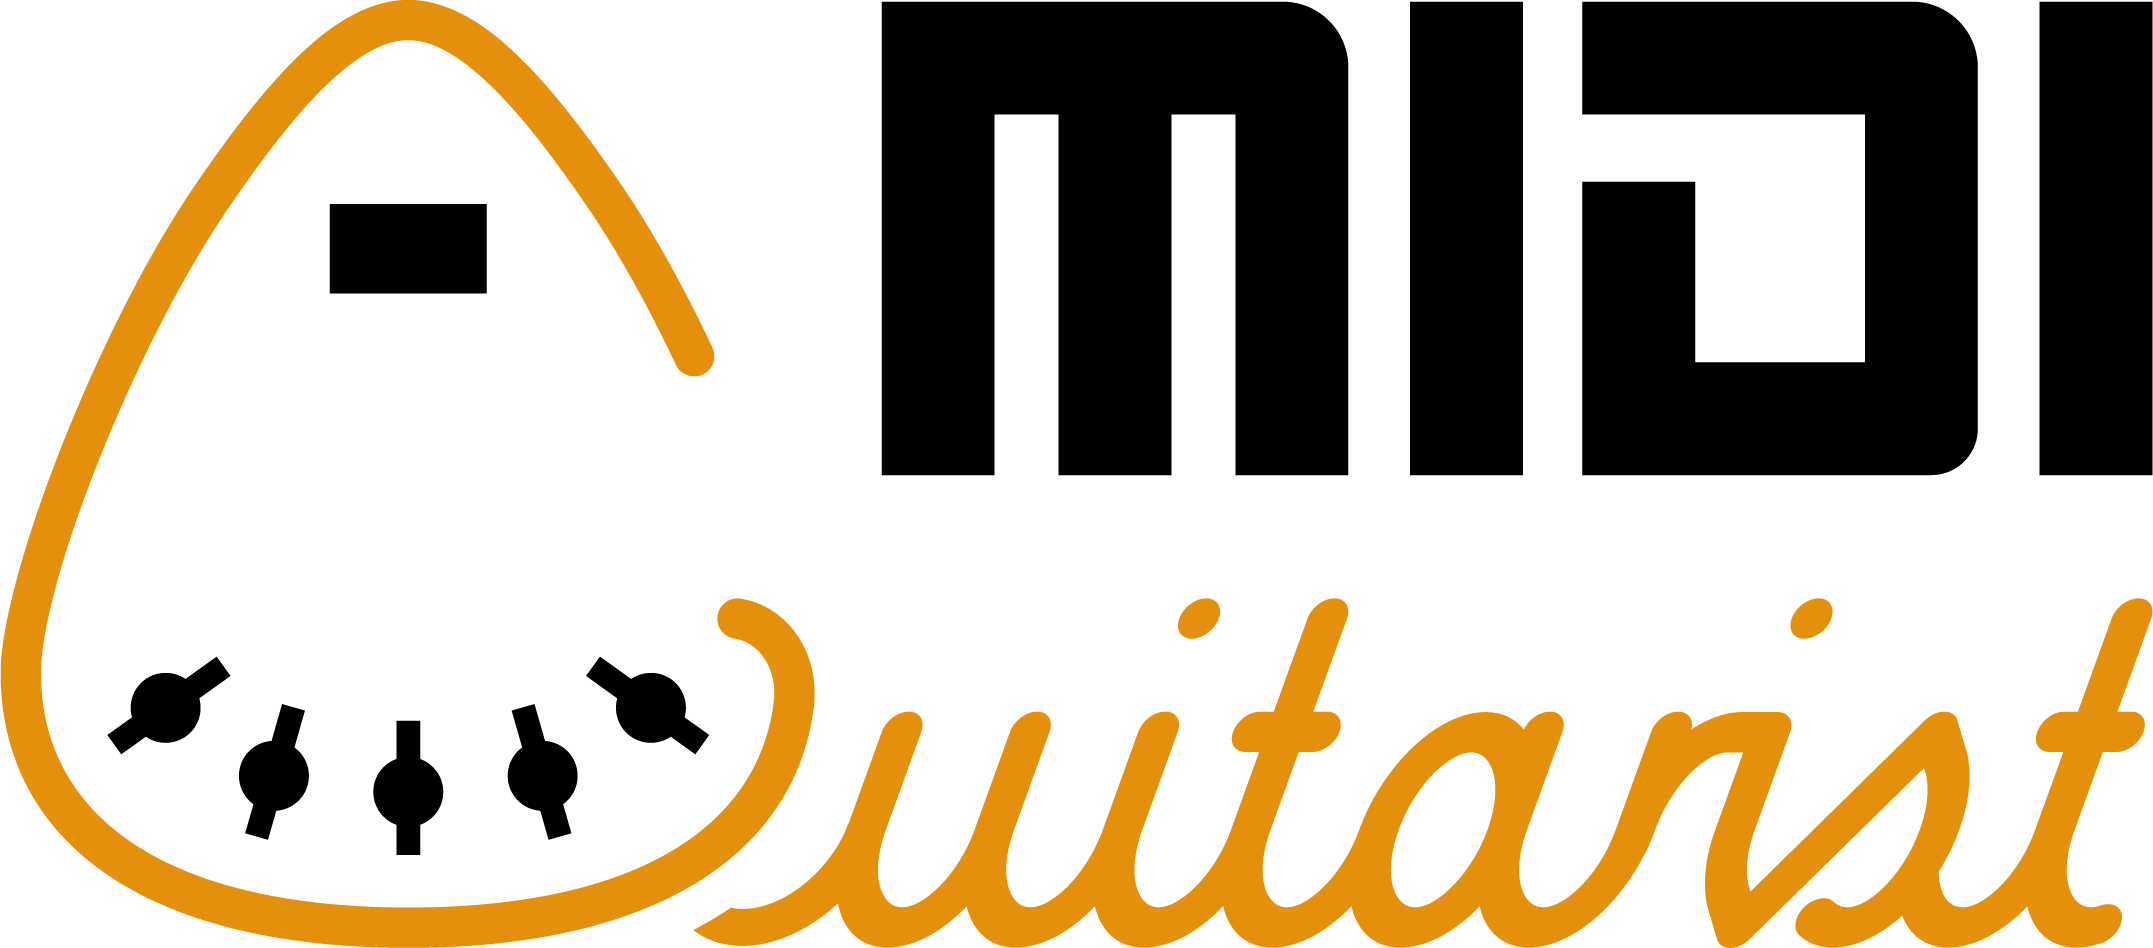 Logo Midi Guitarist